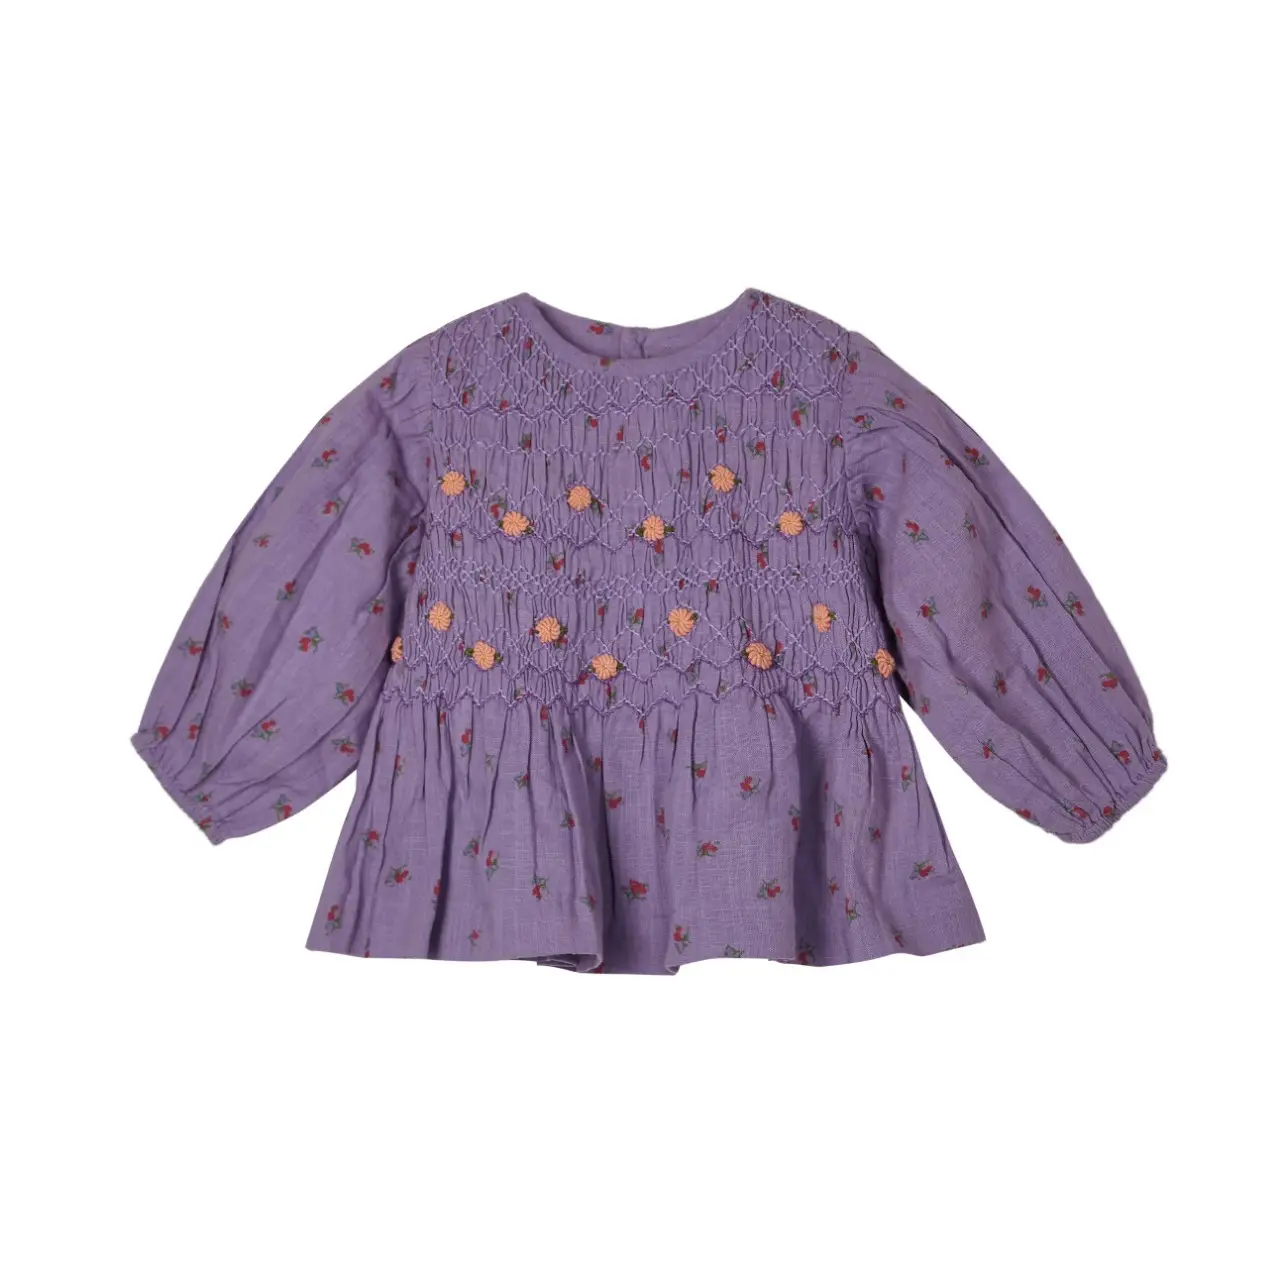 Early spring new girls' Purple baby shirt shirt hand woven embroidery dress baby cotton Flower Girls Dress